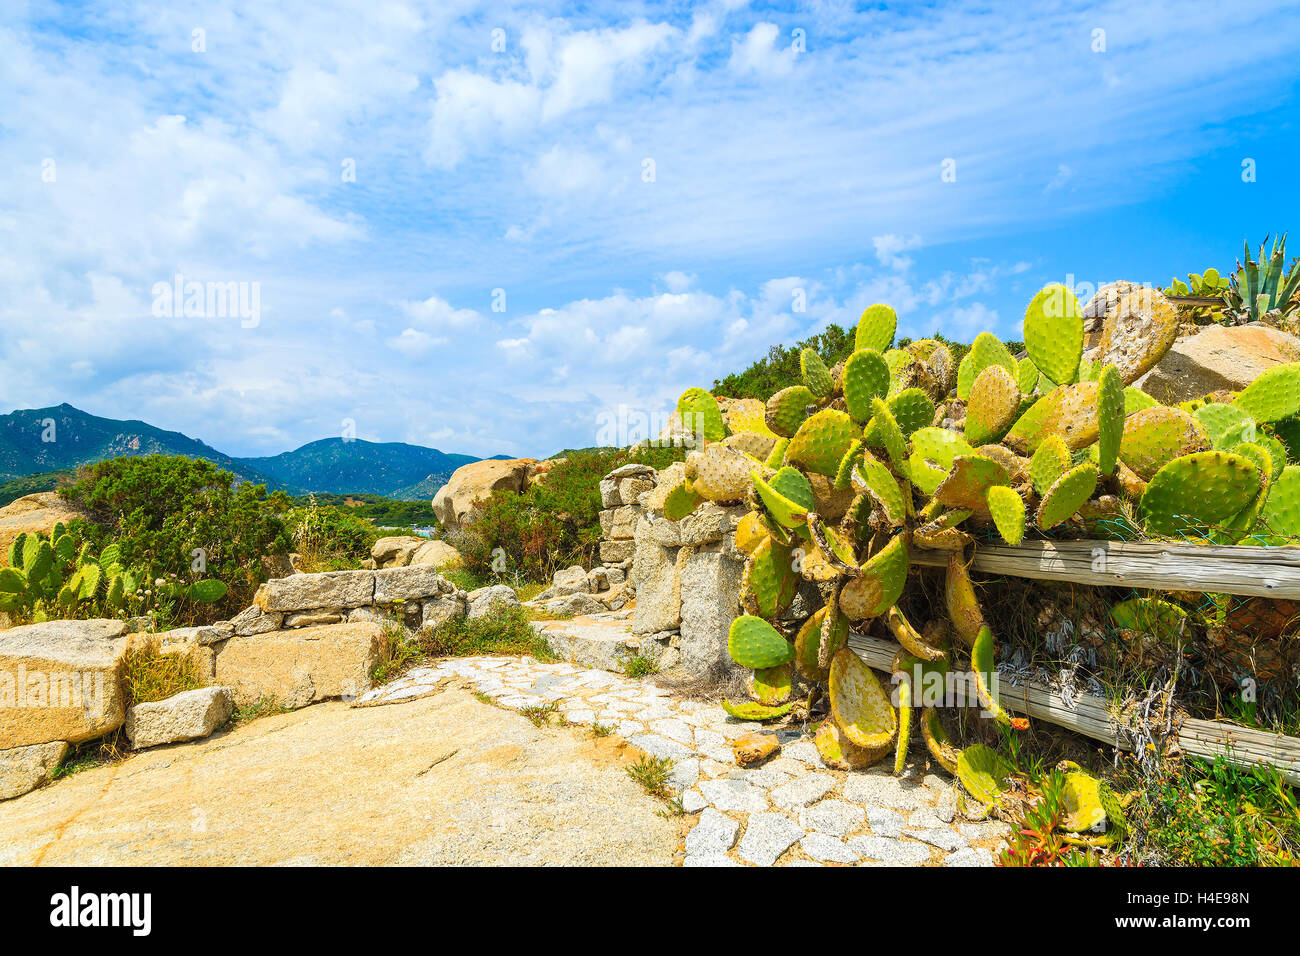 Green cacti flowers growing on coast of Sardinia island near Campulongu beach, Italy Stock Photo